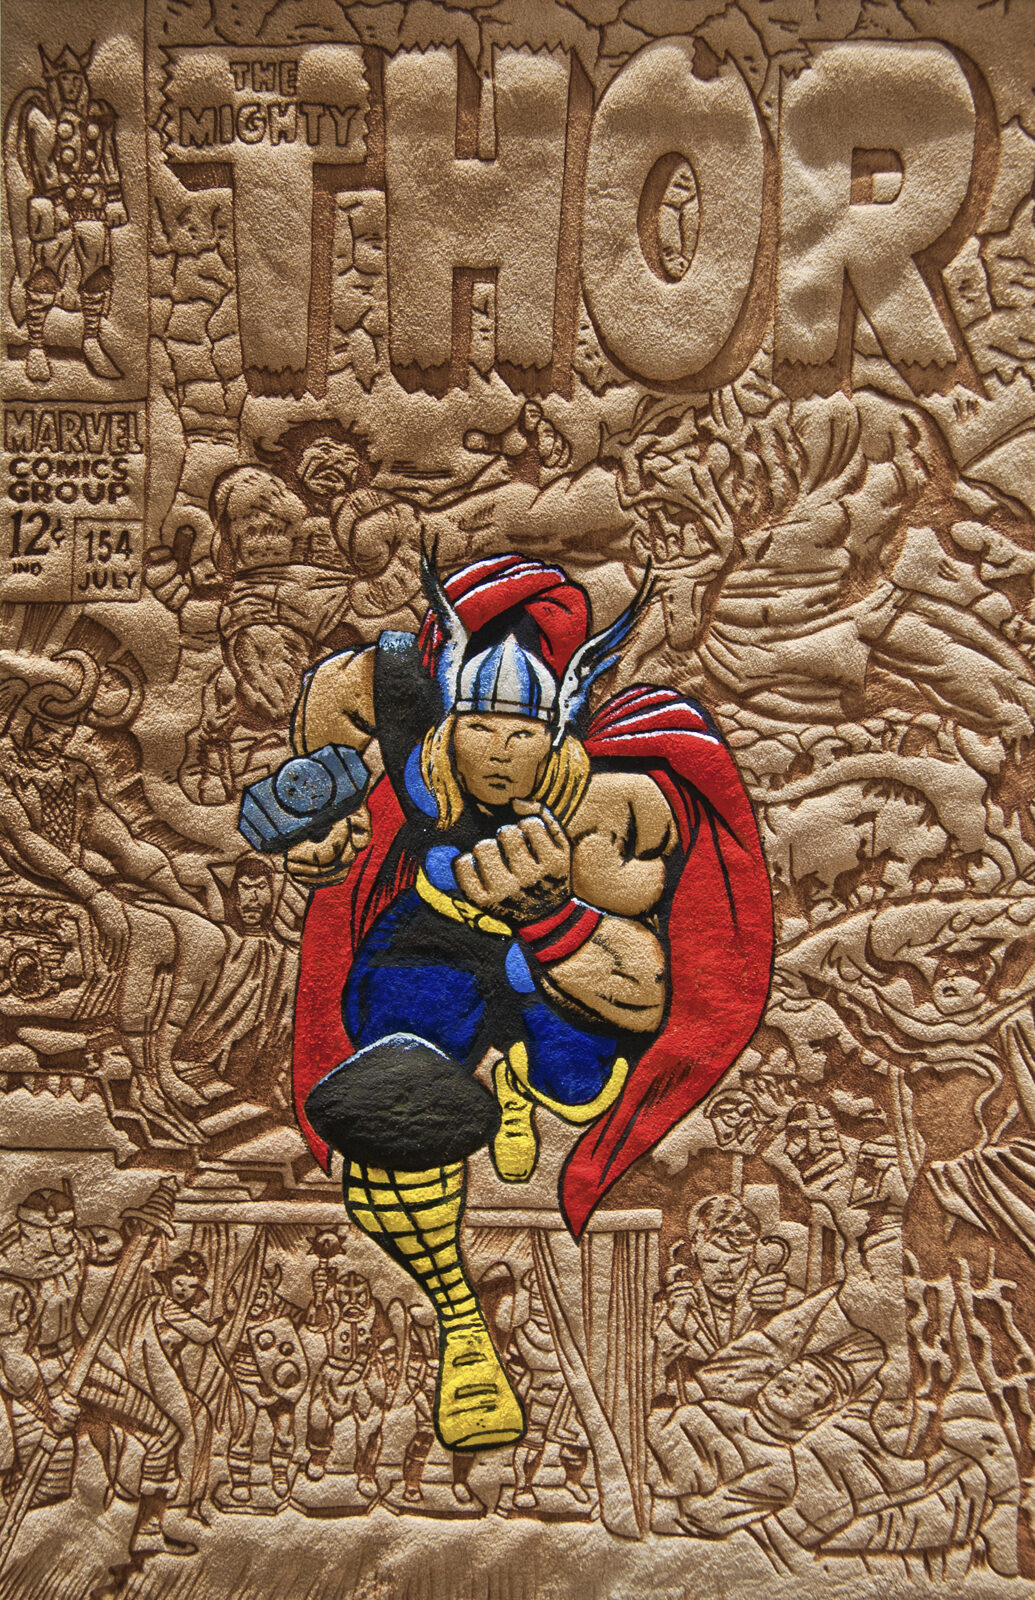 Marvel’s Thor #154 Cover by Jack Kirby: Original Buckskin